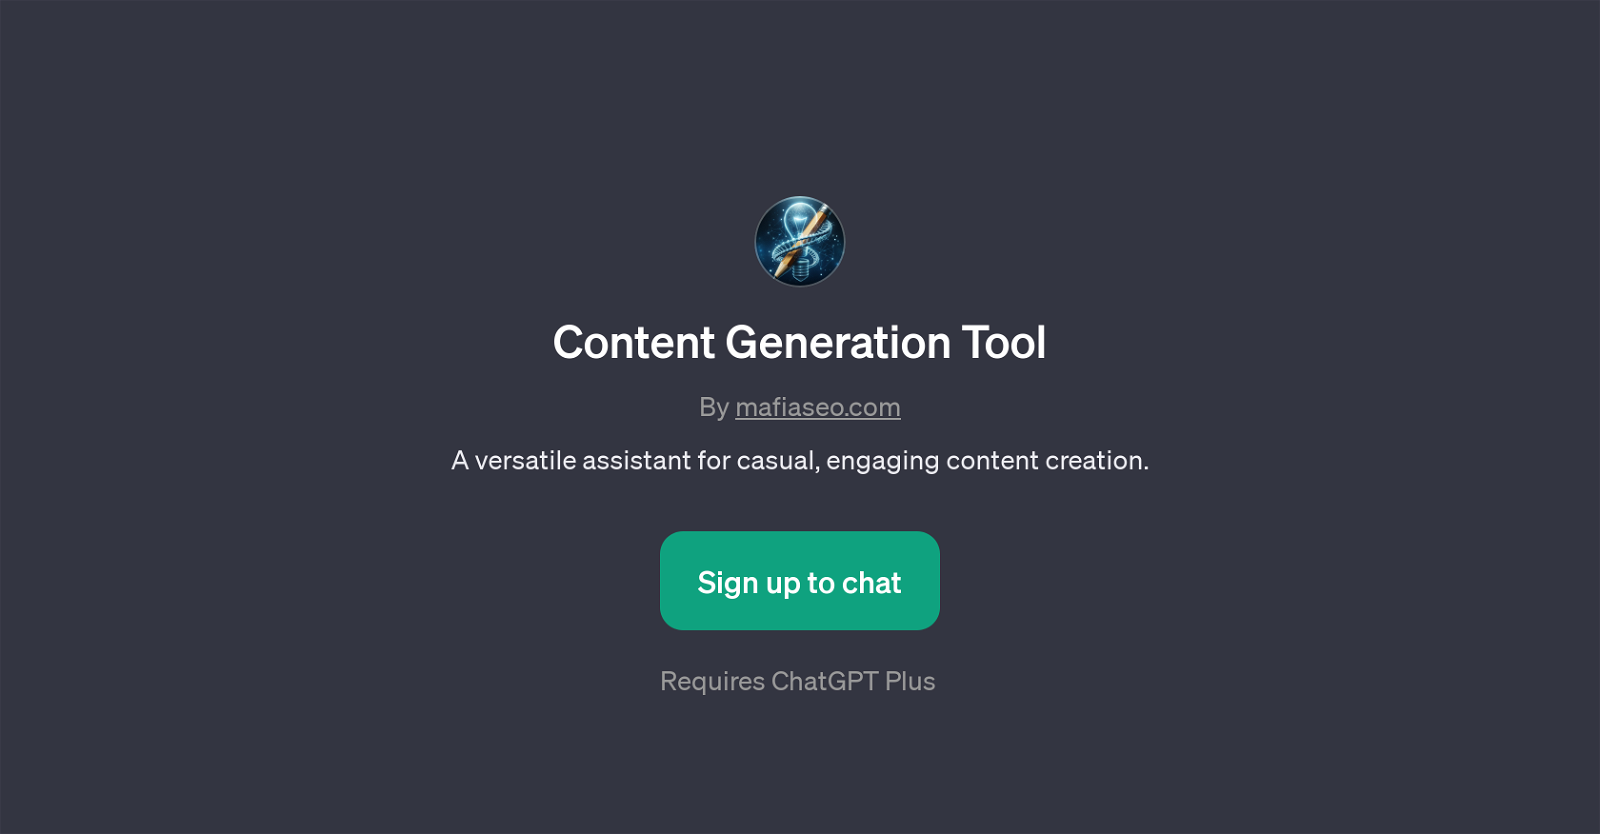 Content Generation Tool website